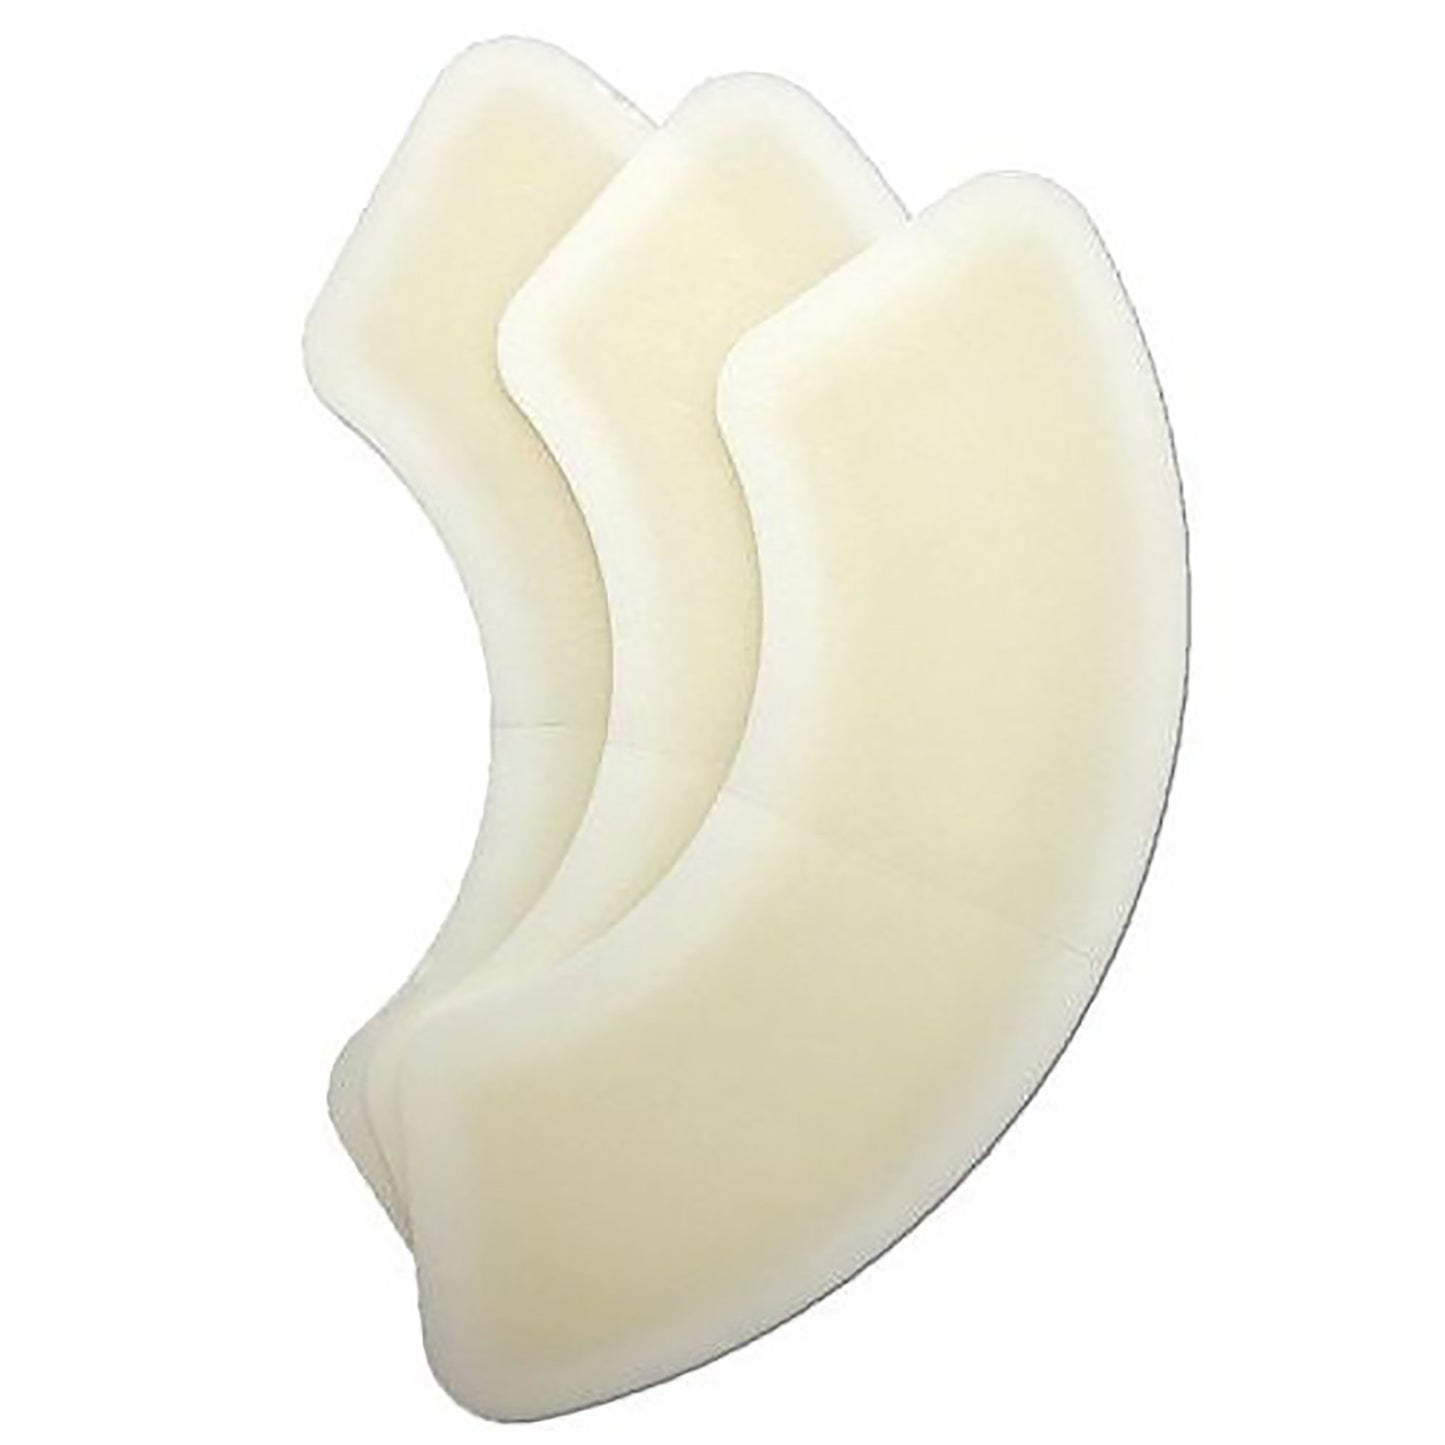 Securi-T USA® Pre-Cut Hydrocolloid Skin Barrier Strip